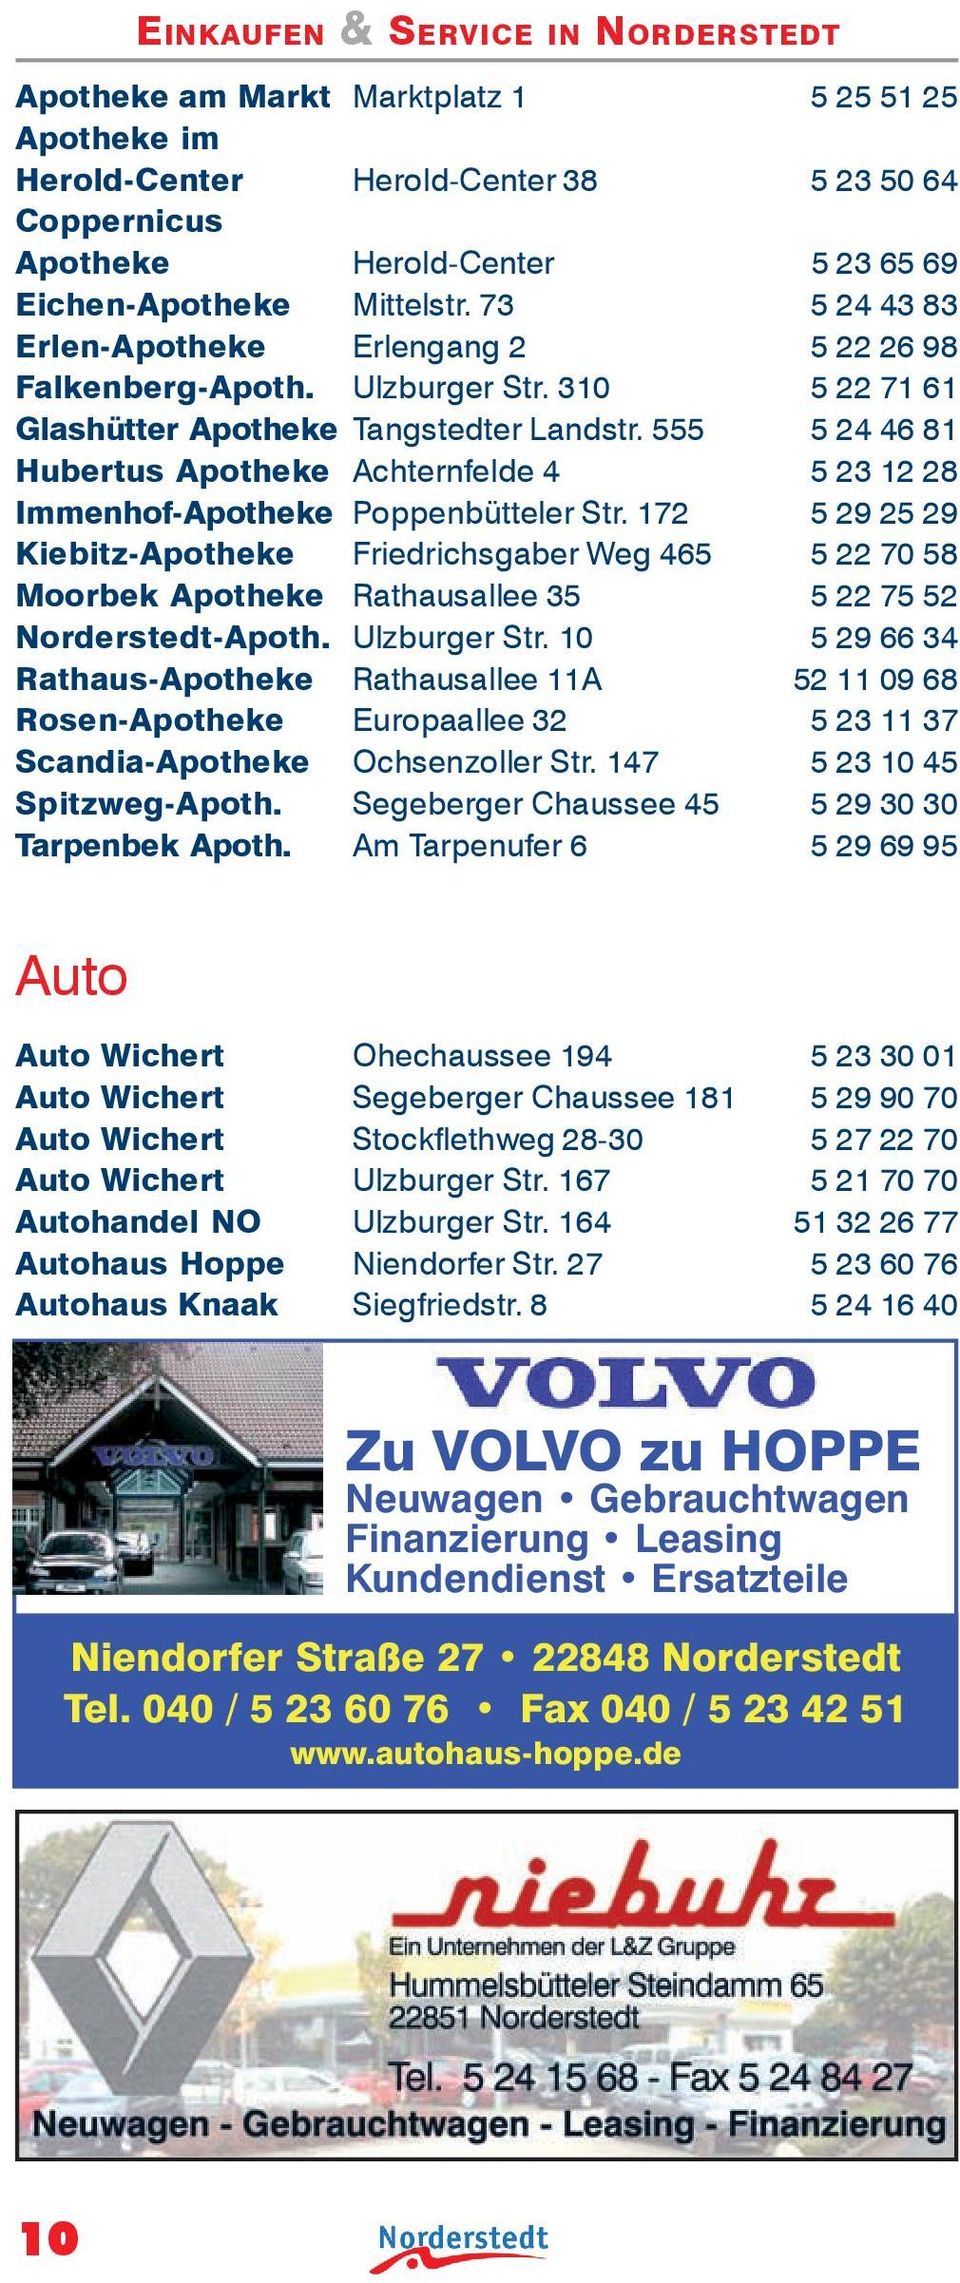 555 5 24 46 81 Hubertus Apotheke Achternfelde 4 5 23 12 28 Immenhof-Apotheke Poppenbütteler Str.